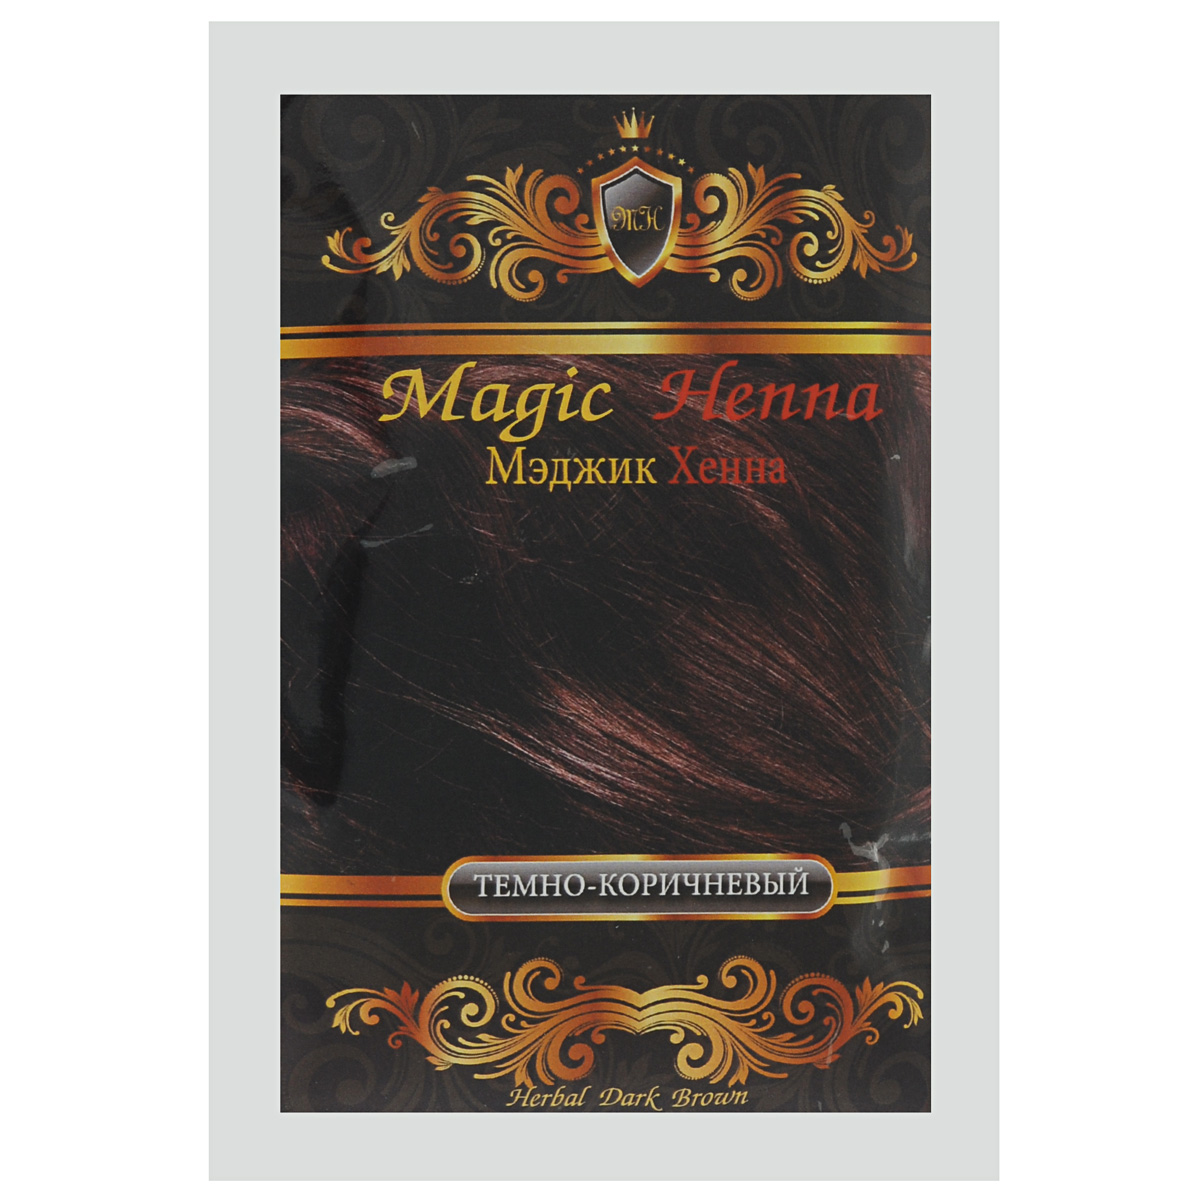 Magic henna лечебная травяная краска для волос с хной